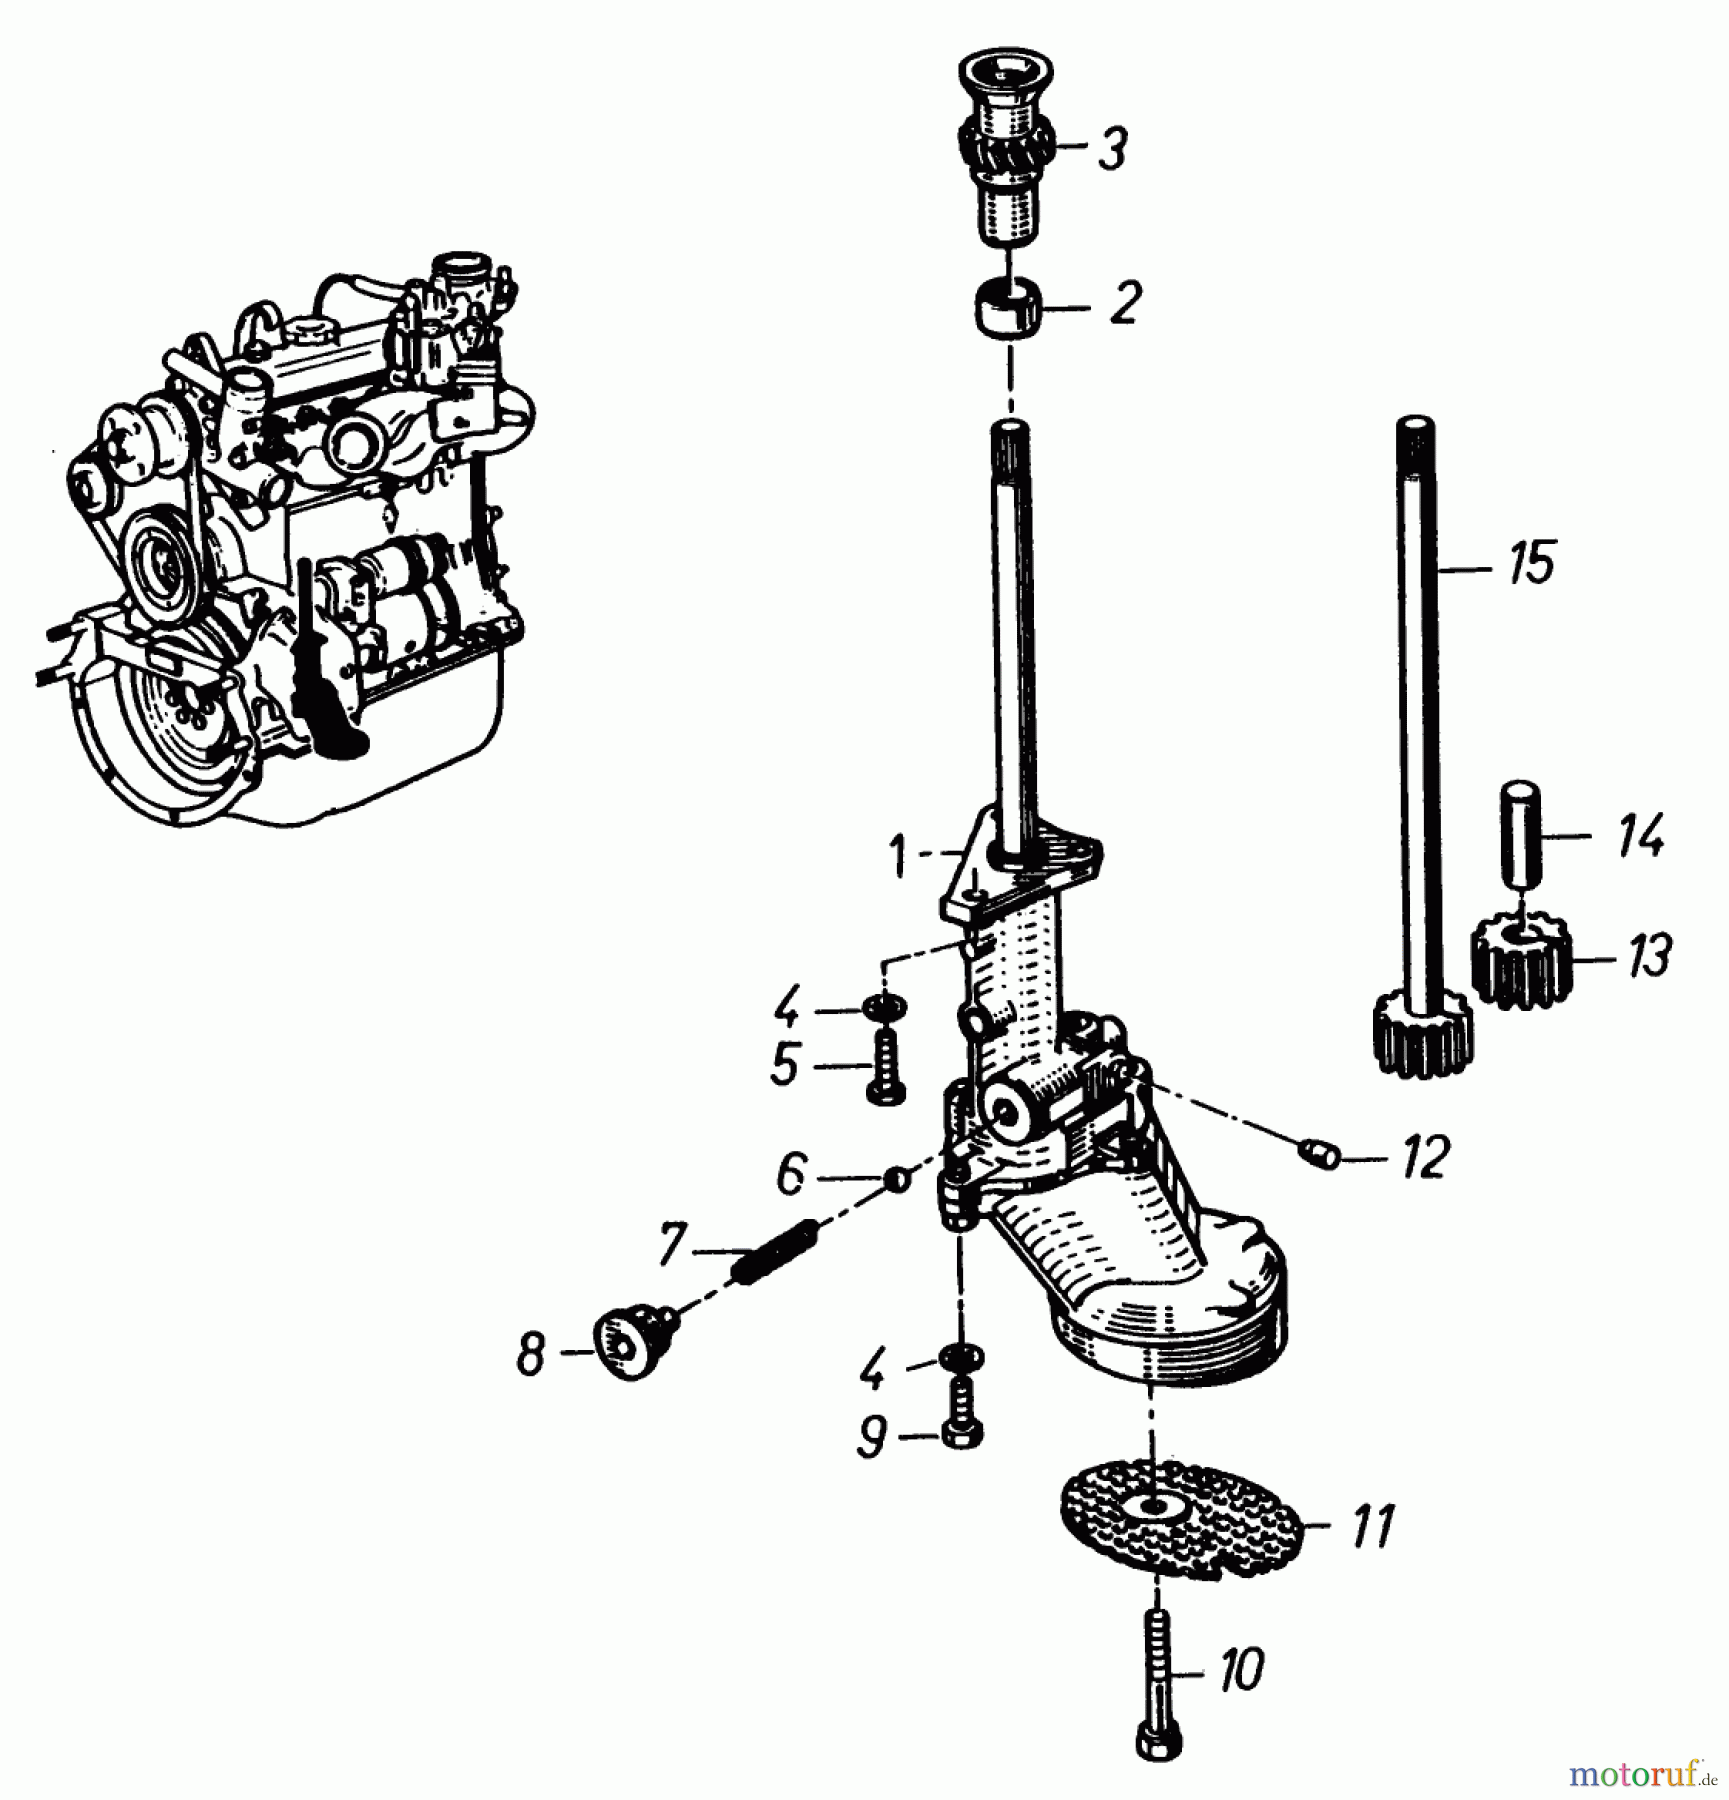  Toro Neu Mowers, Lawn & Garden Tractor Seite 2 91-20RG01 (D-250) - Toro D-250 10-Speed Tractor, 1980 OIL PUMP